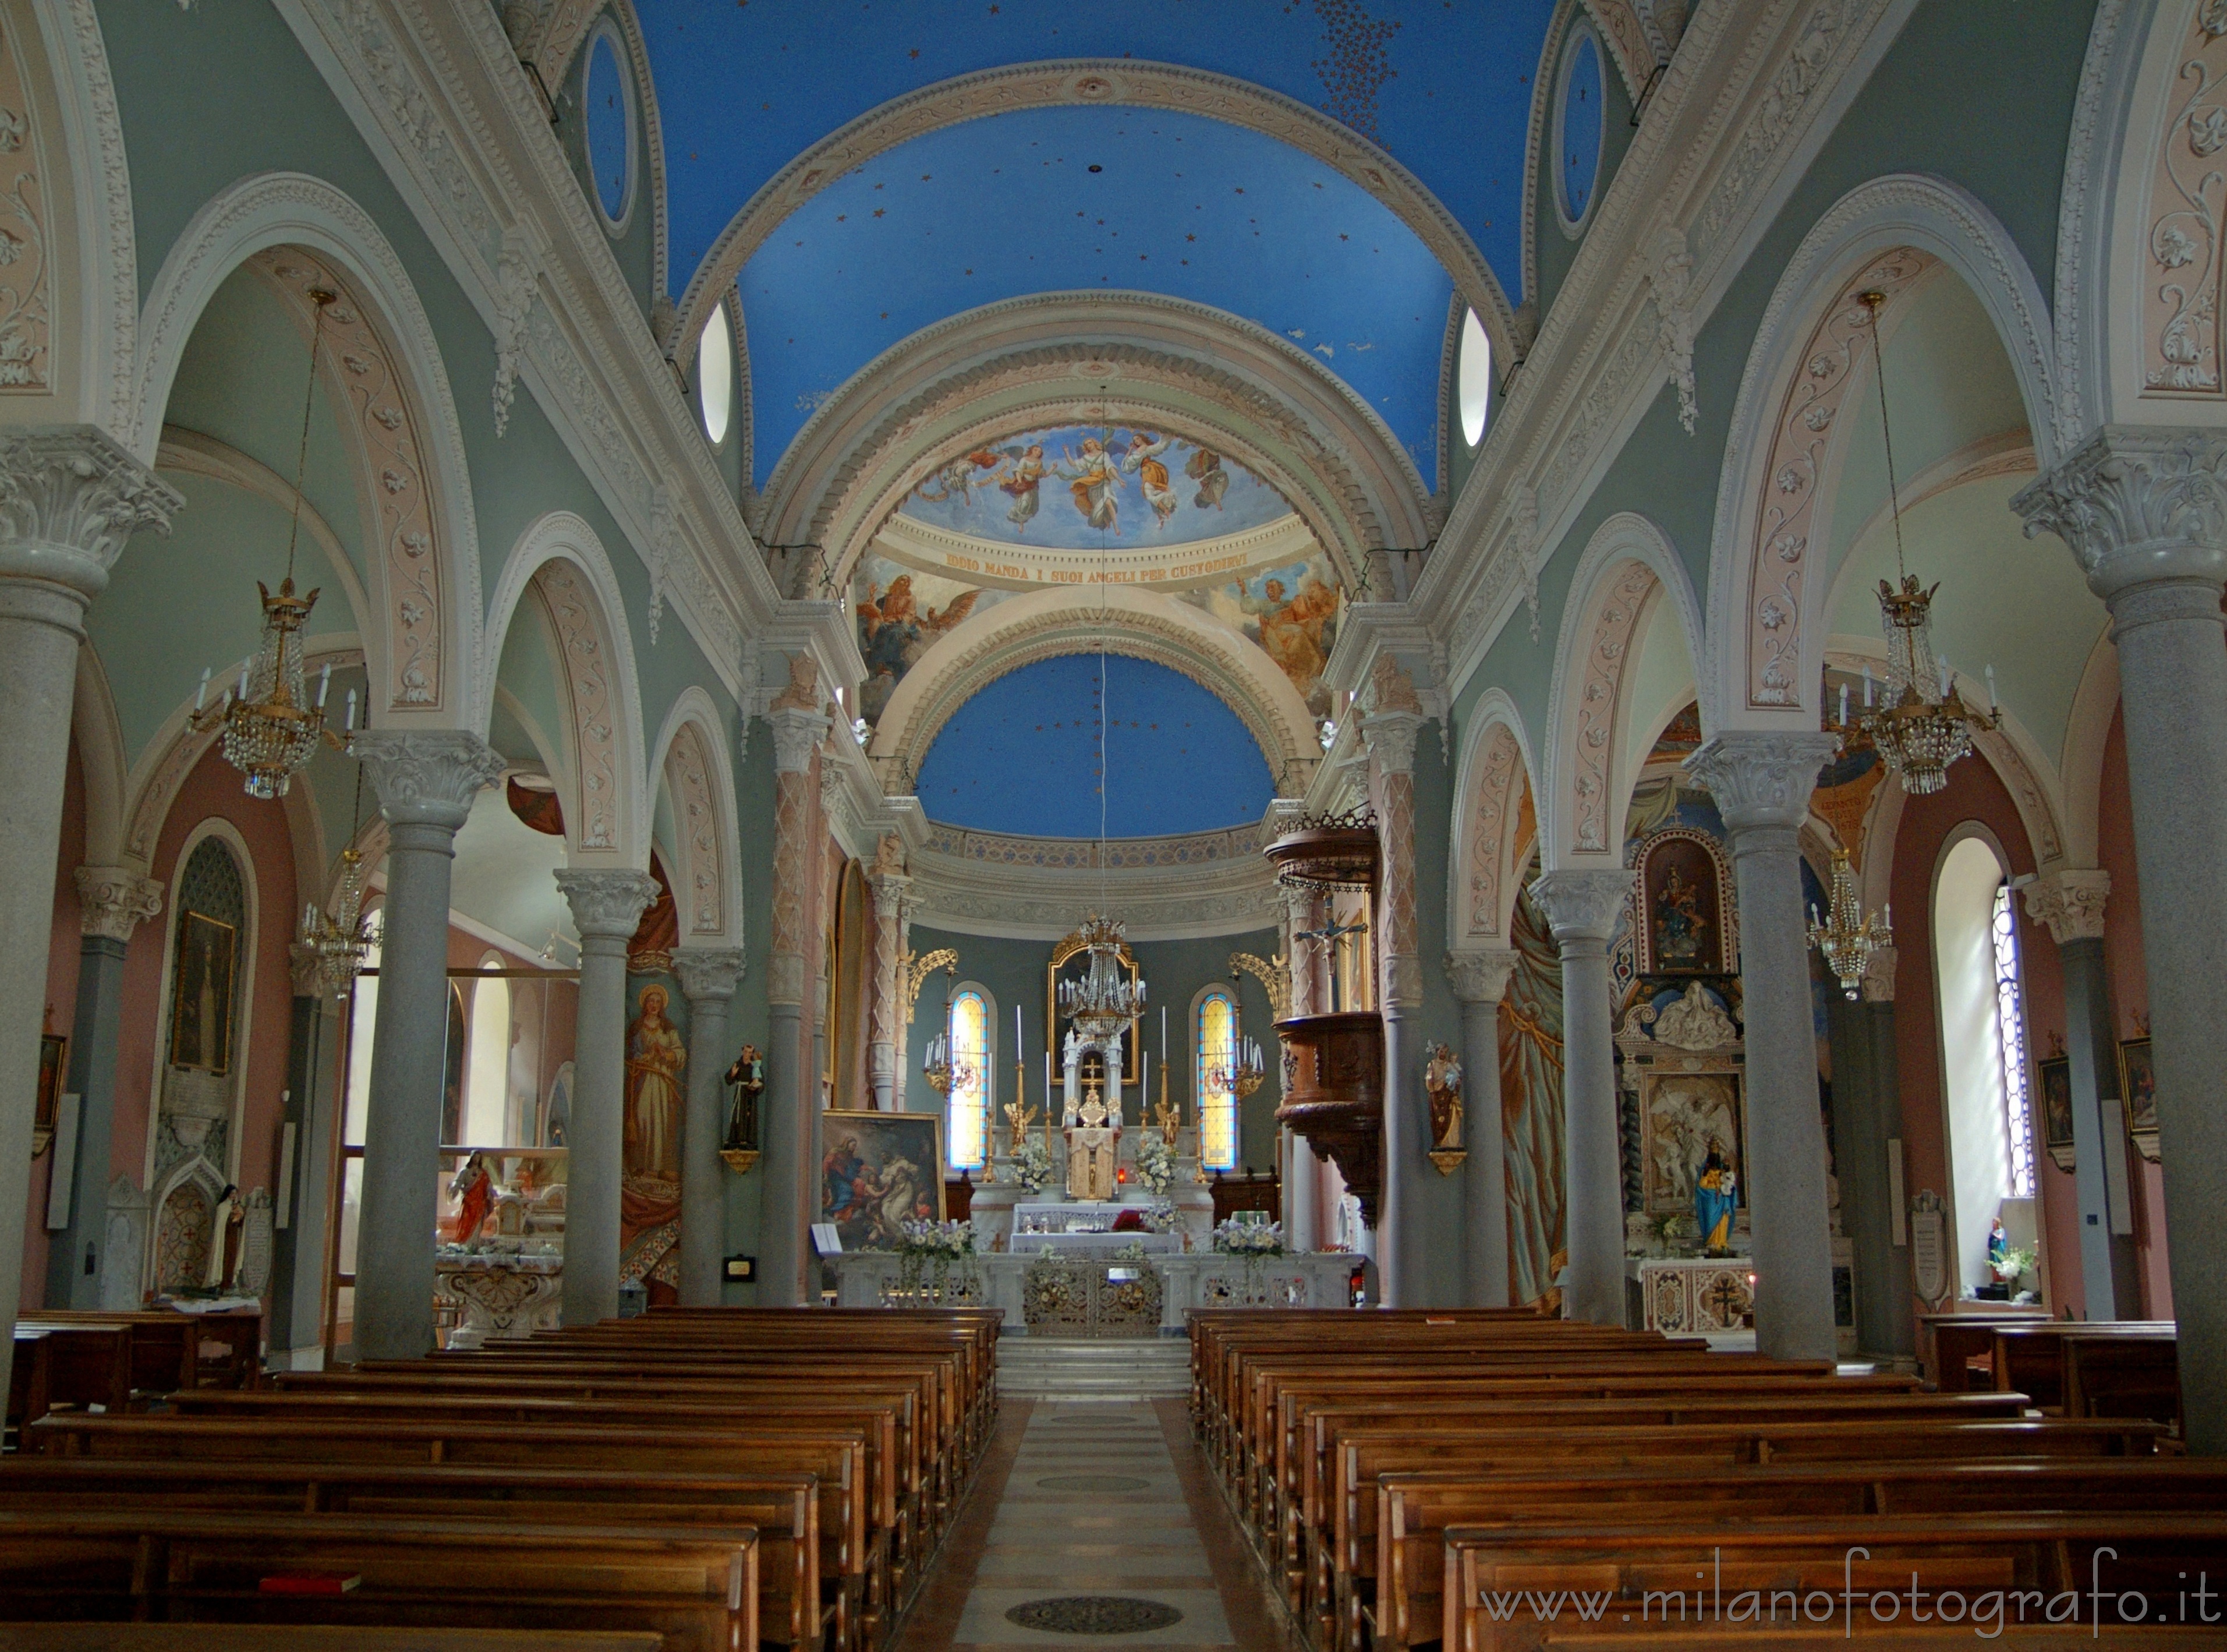 Rosazza (Biella, Italy): The church of Rosazza - Rosazza (Biella, Italy)